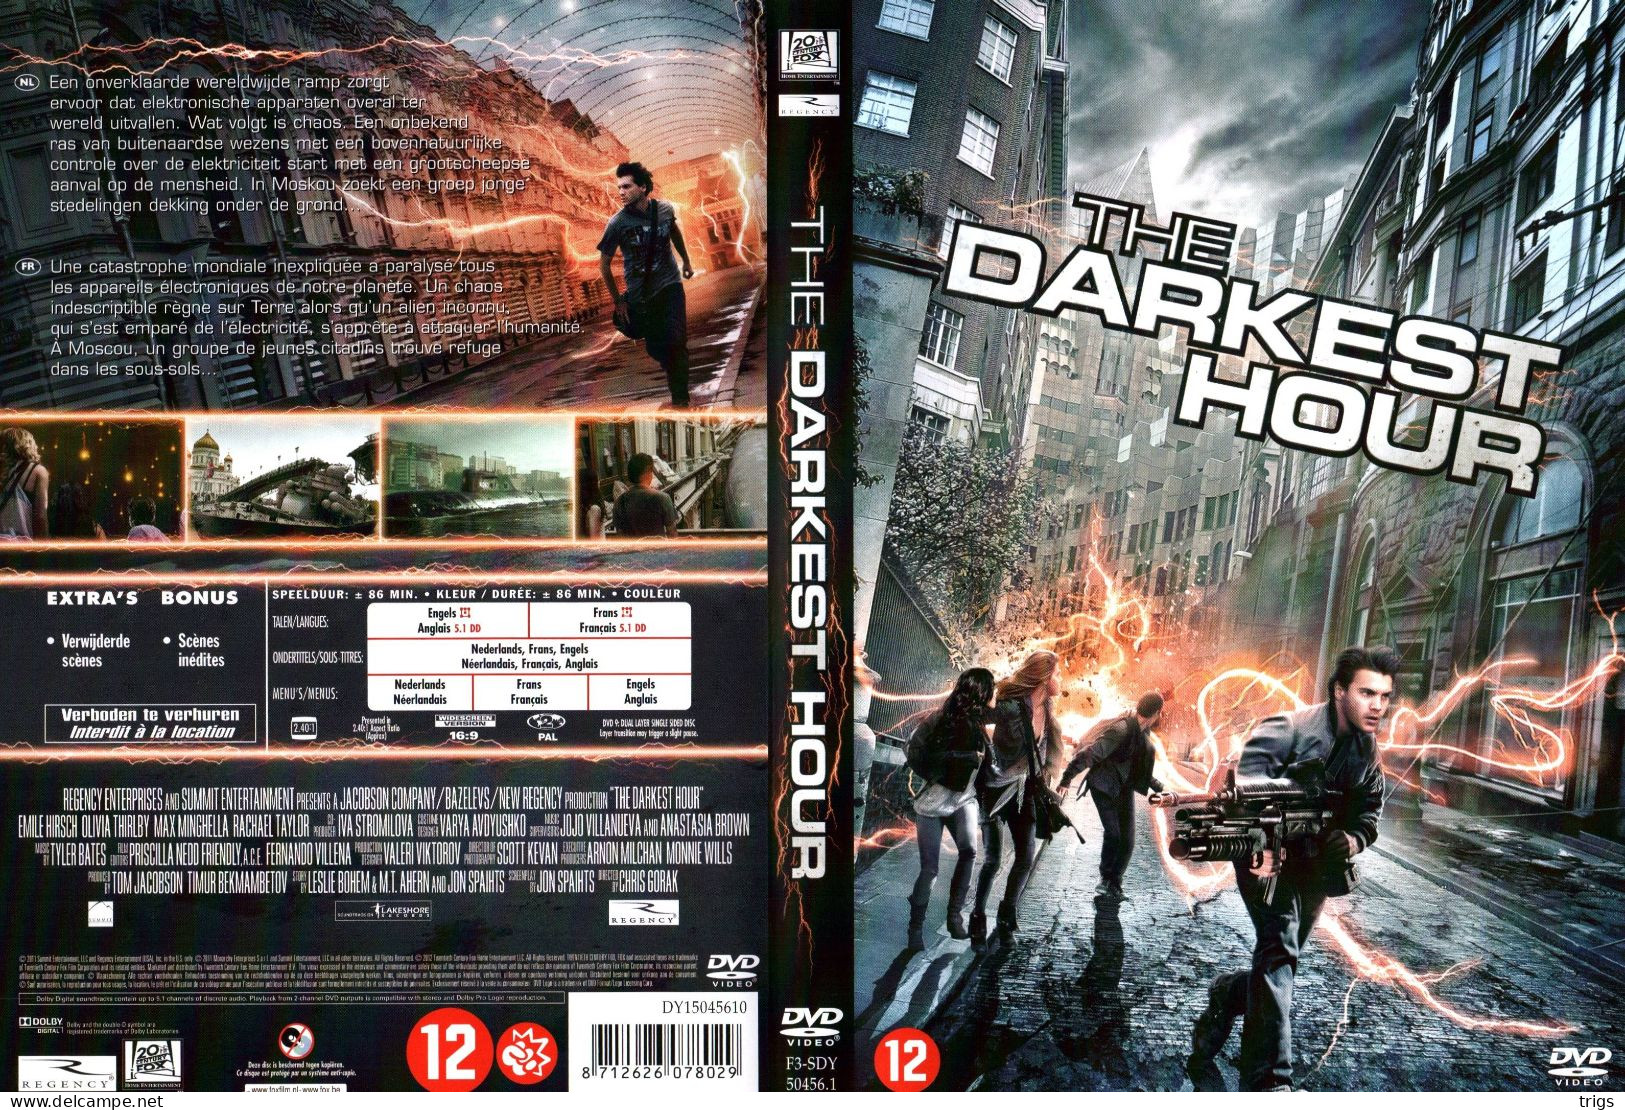 DVD - The Darkest Hour - Sci-Fi, Fantasy